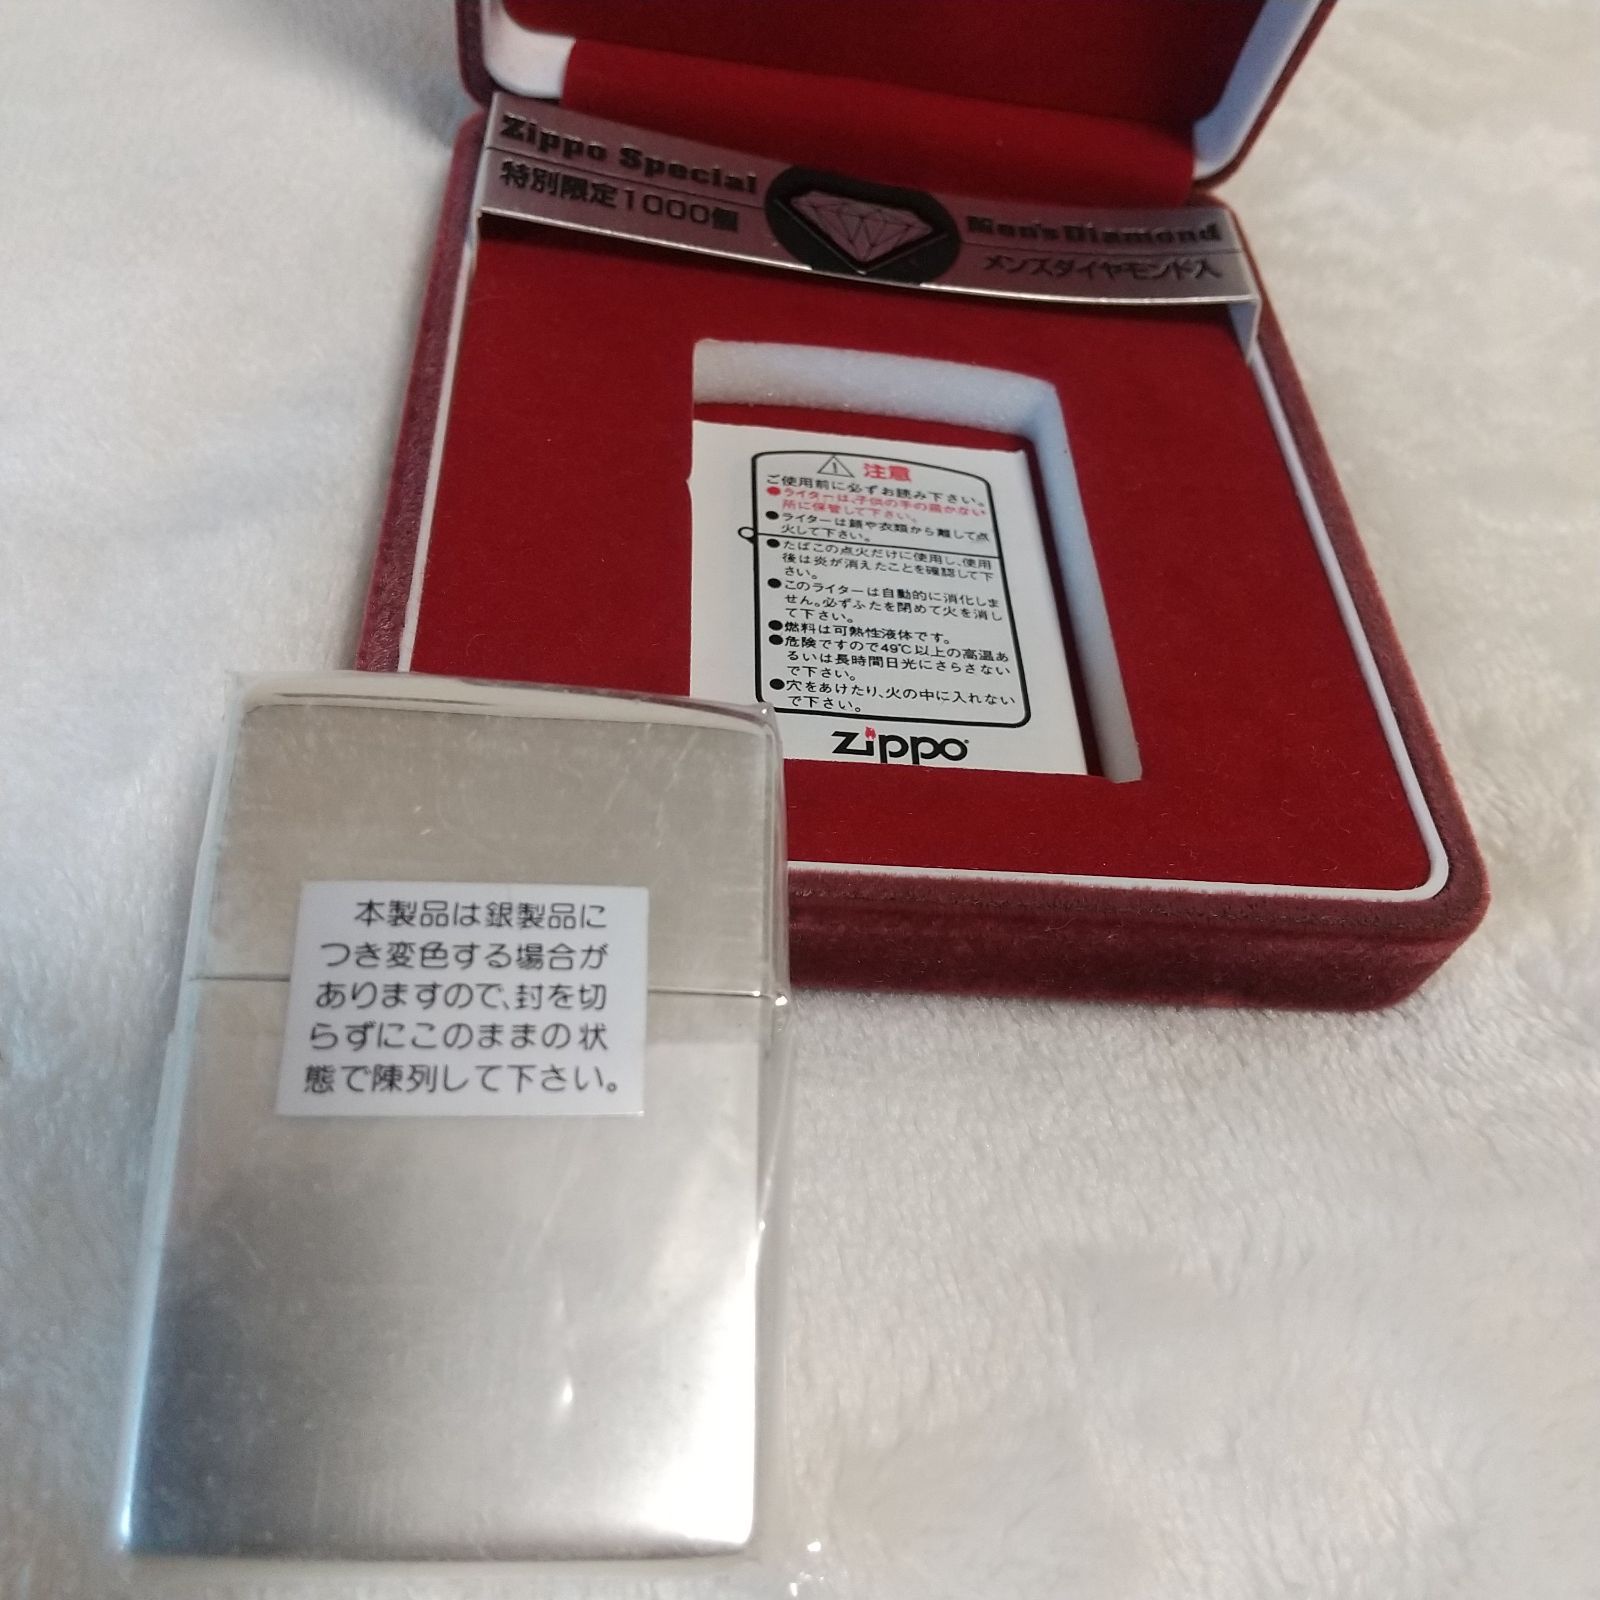 ZIPPO メンズダイヤモンド付き 特別限定品 1000個 No.0875 未使用品 